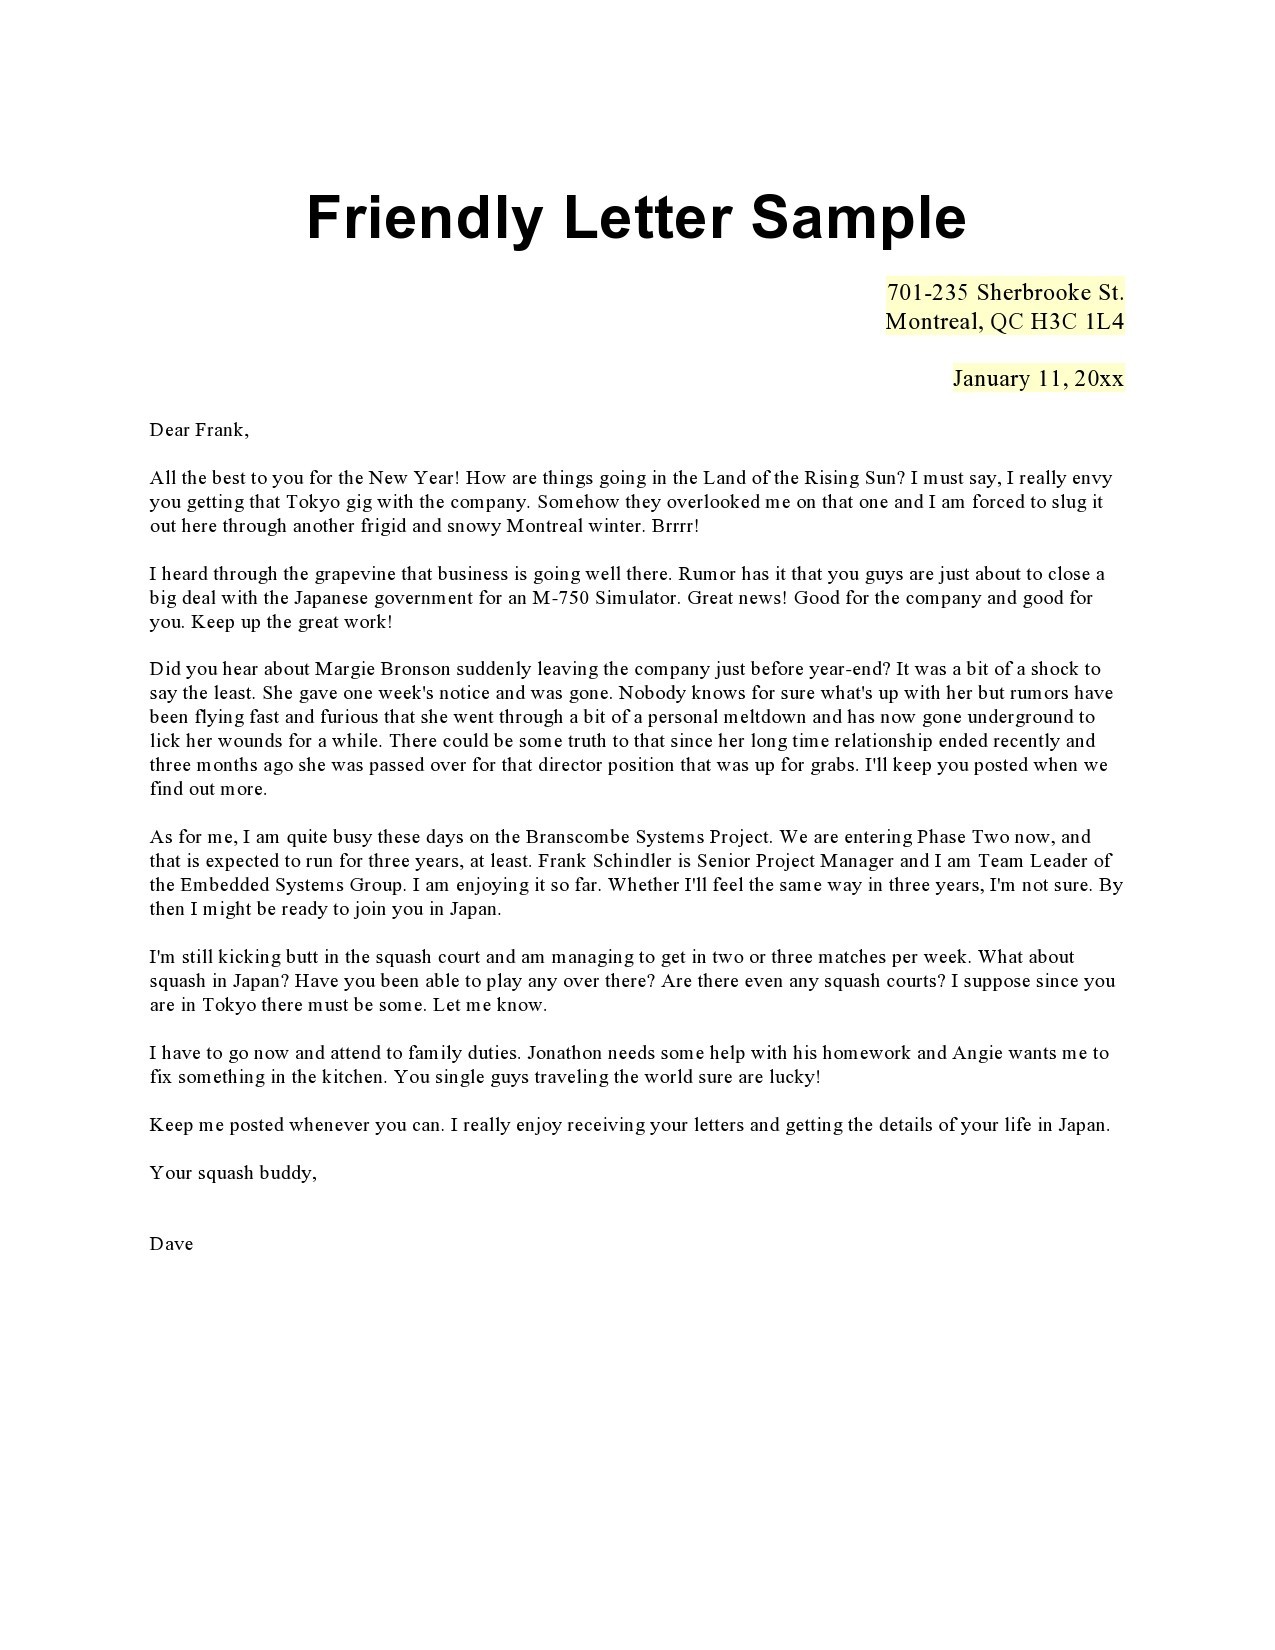 Free friendly letter format 20